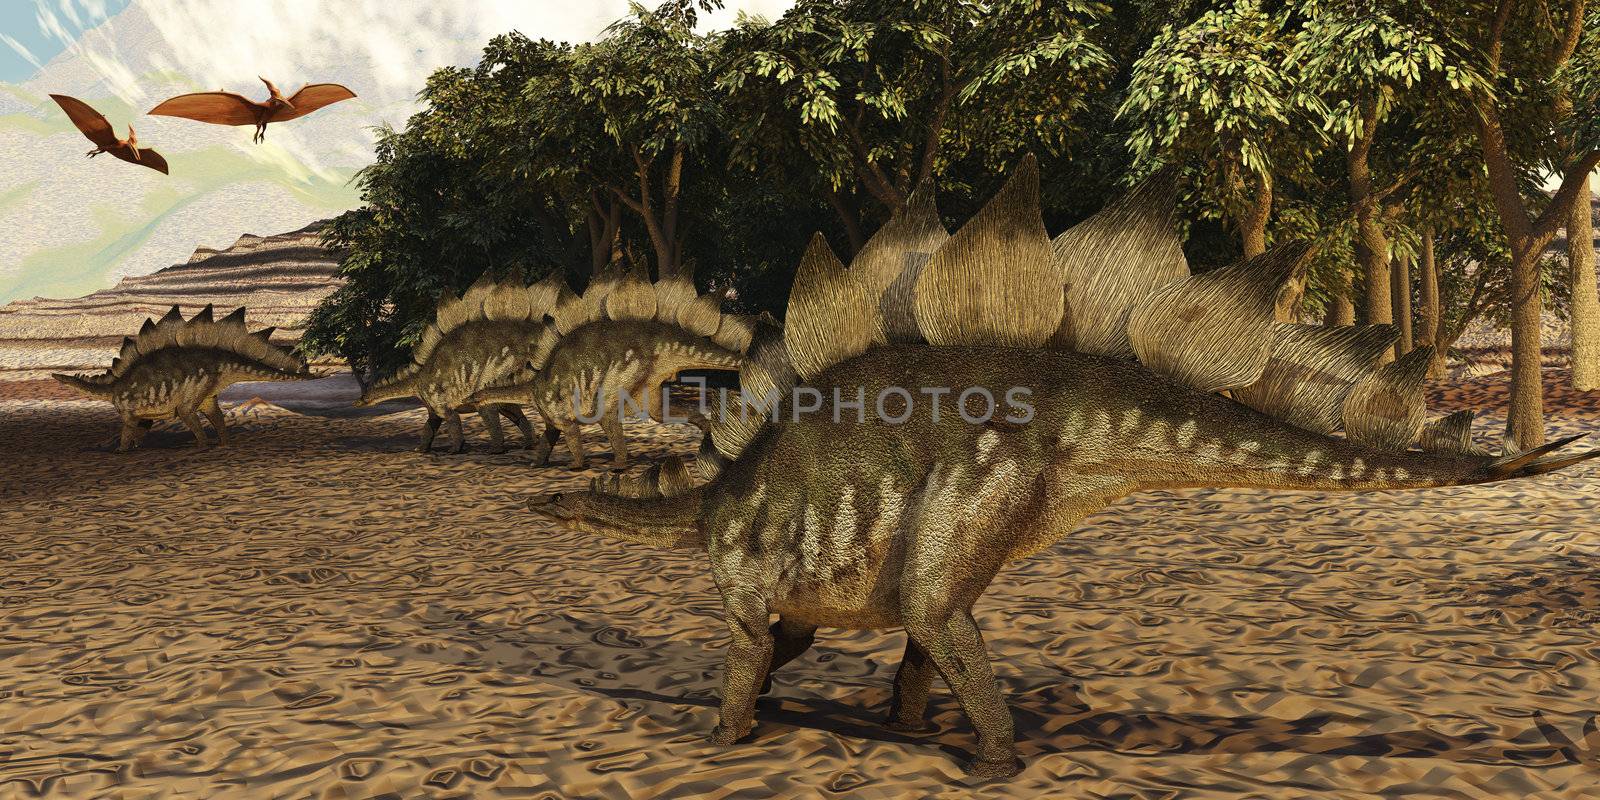 Stegosaurus by Catmando